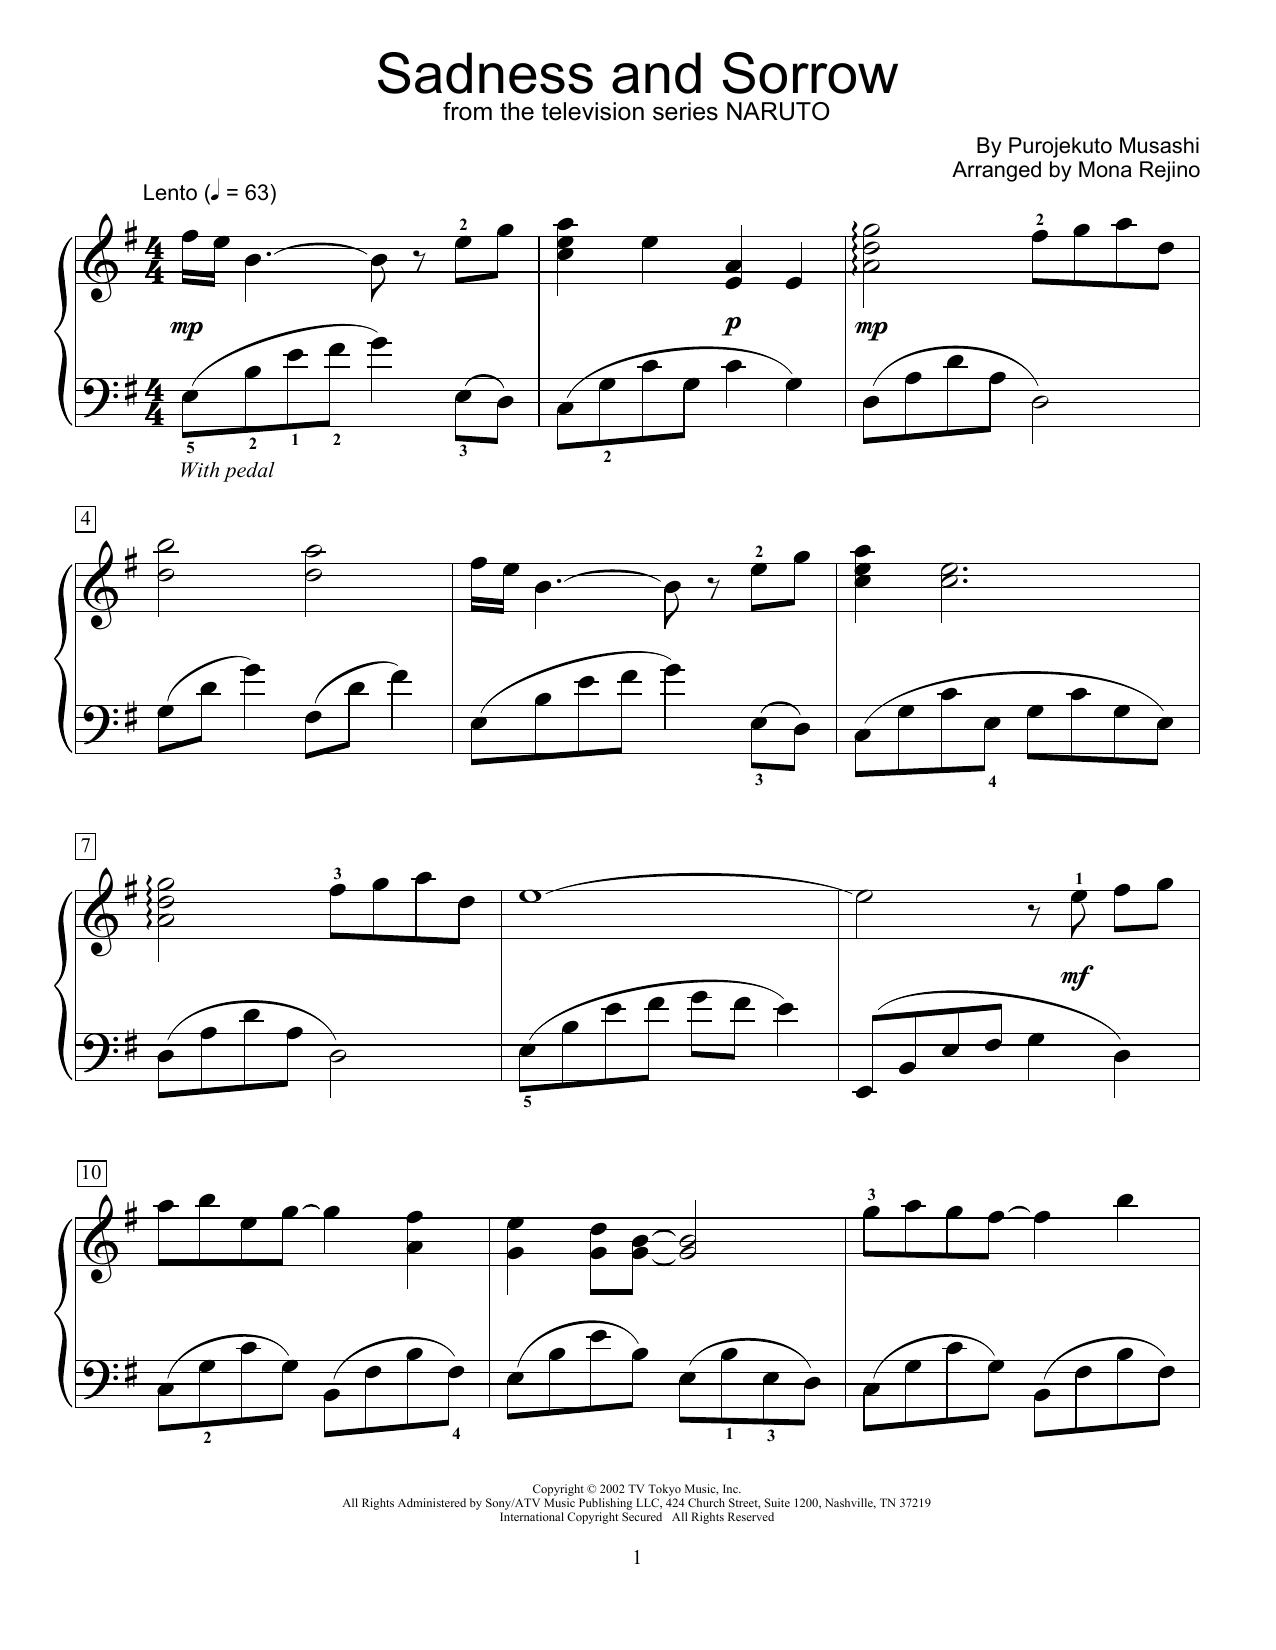 Purojekuto Musashi Sadness And Sorrow (from Naruto) (arr. Mona Rejino) sheet music notes and chords arranged for Educational Piano